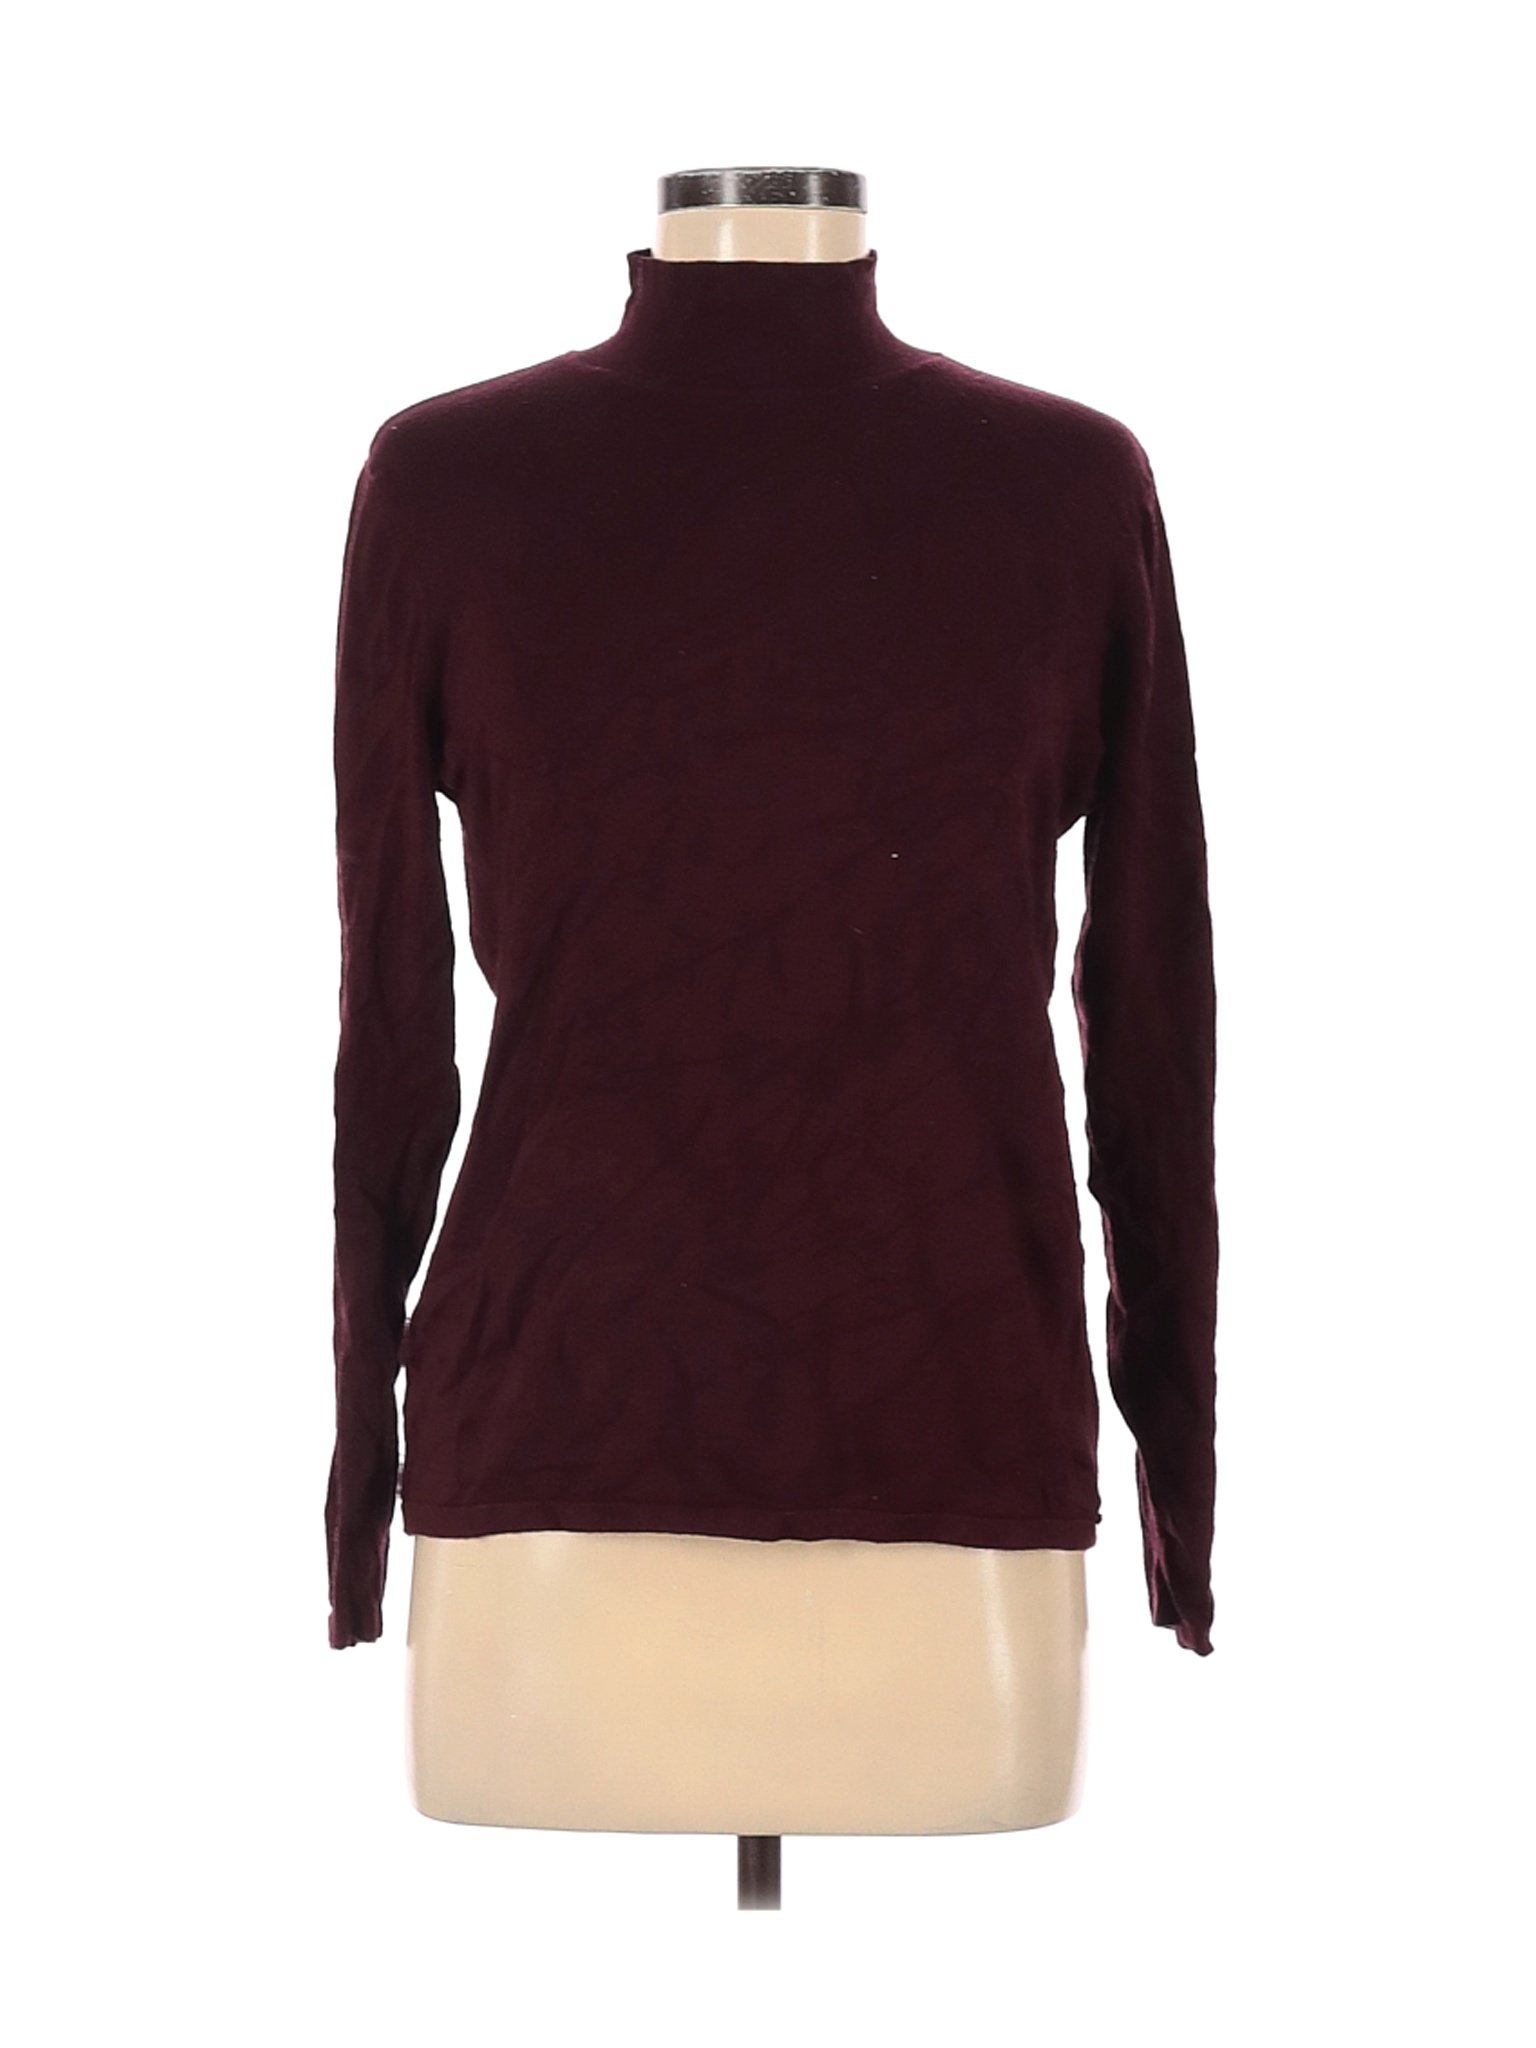 Tahari Women Purple Turtleneck Sweater M | eBay